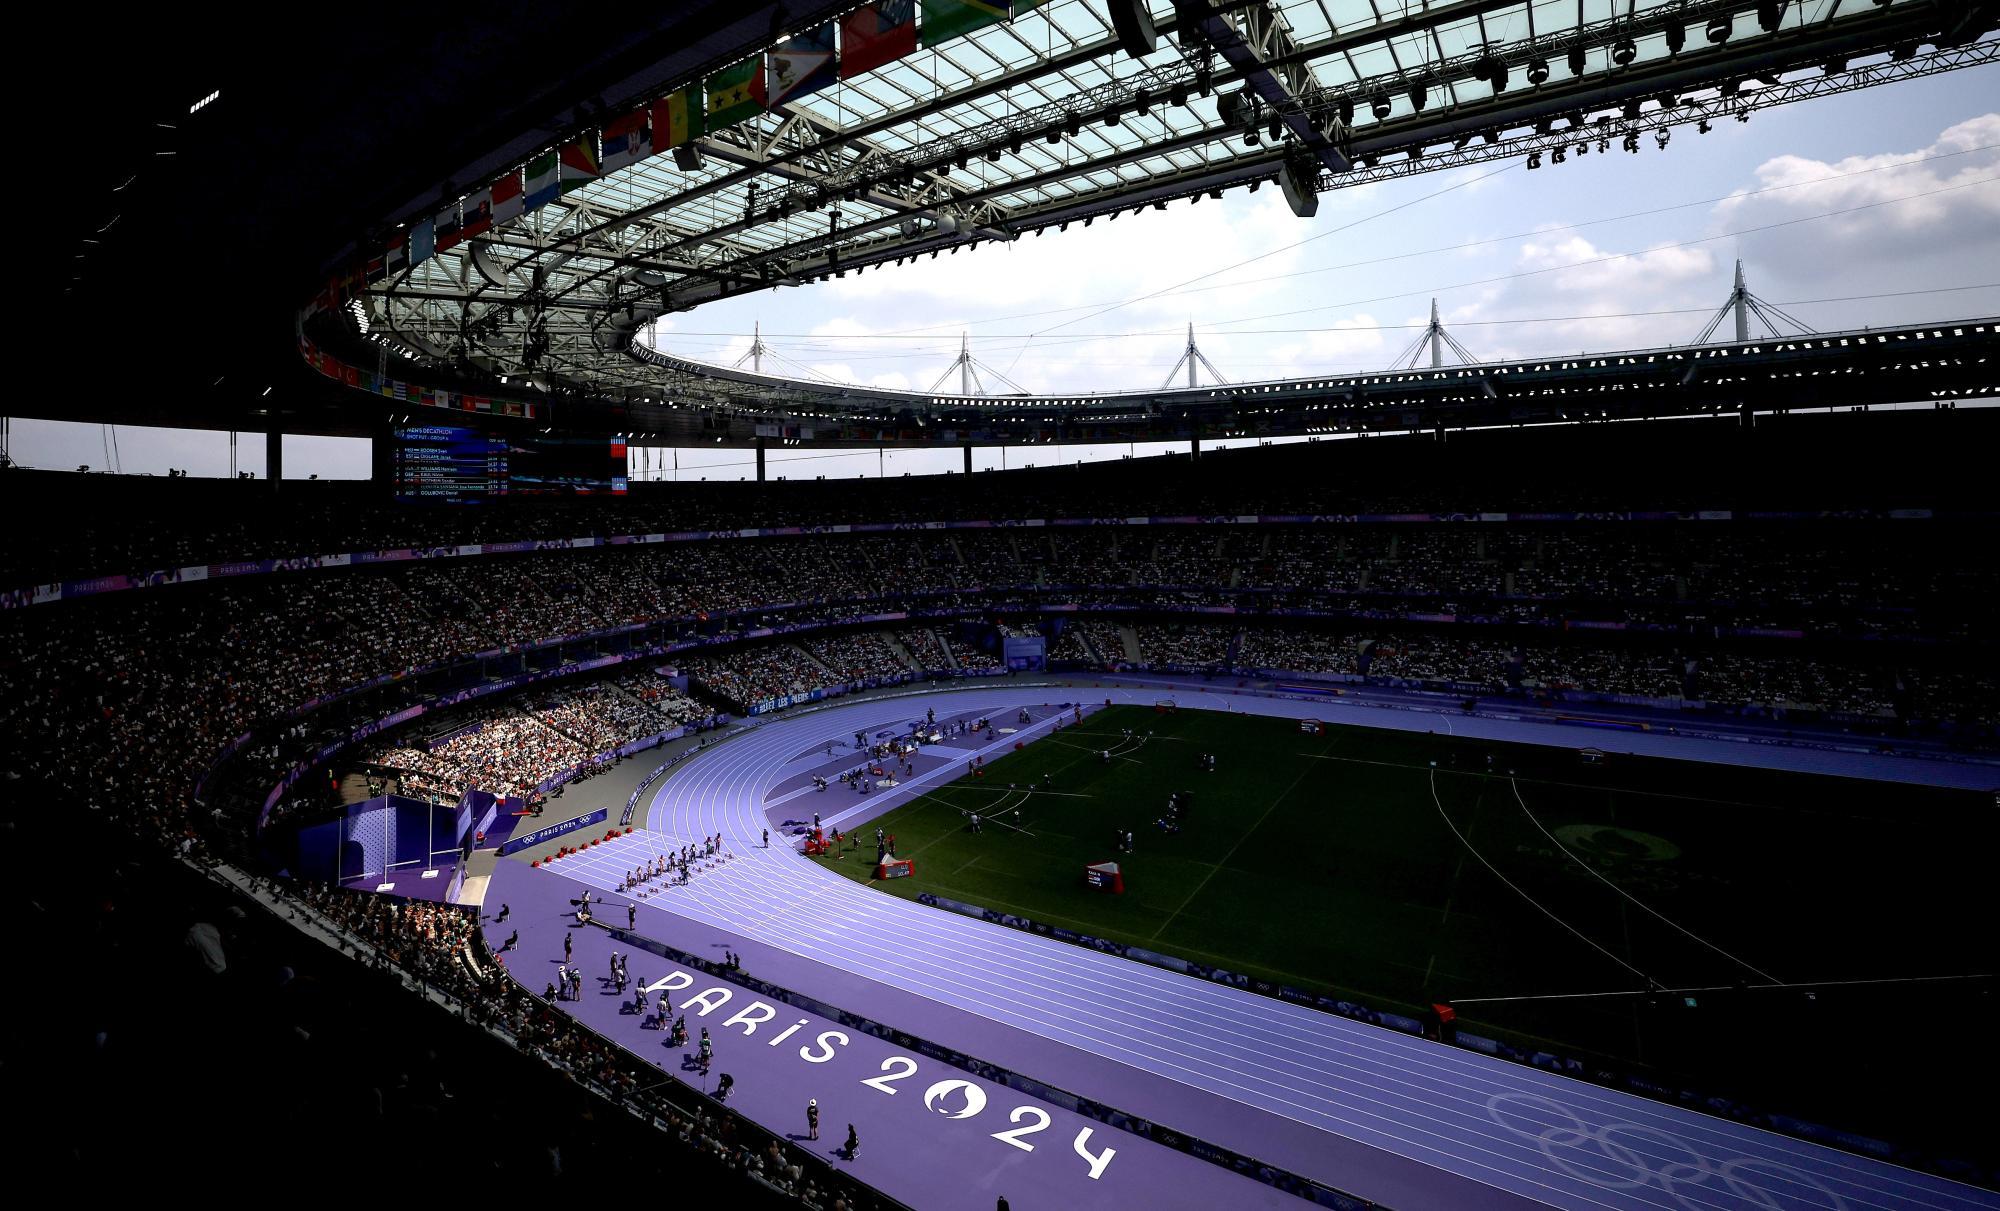 Aufregung in Paris: Bomben-Alarm rund um Olympia-Stadion?